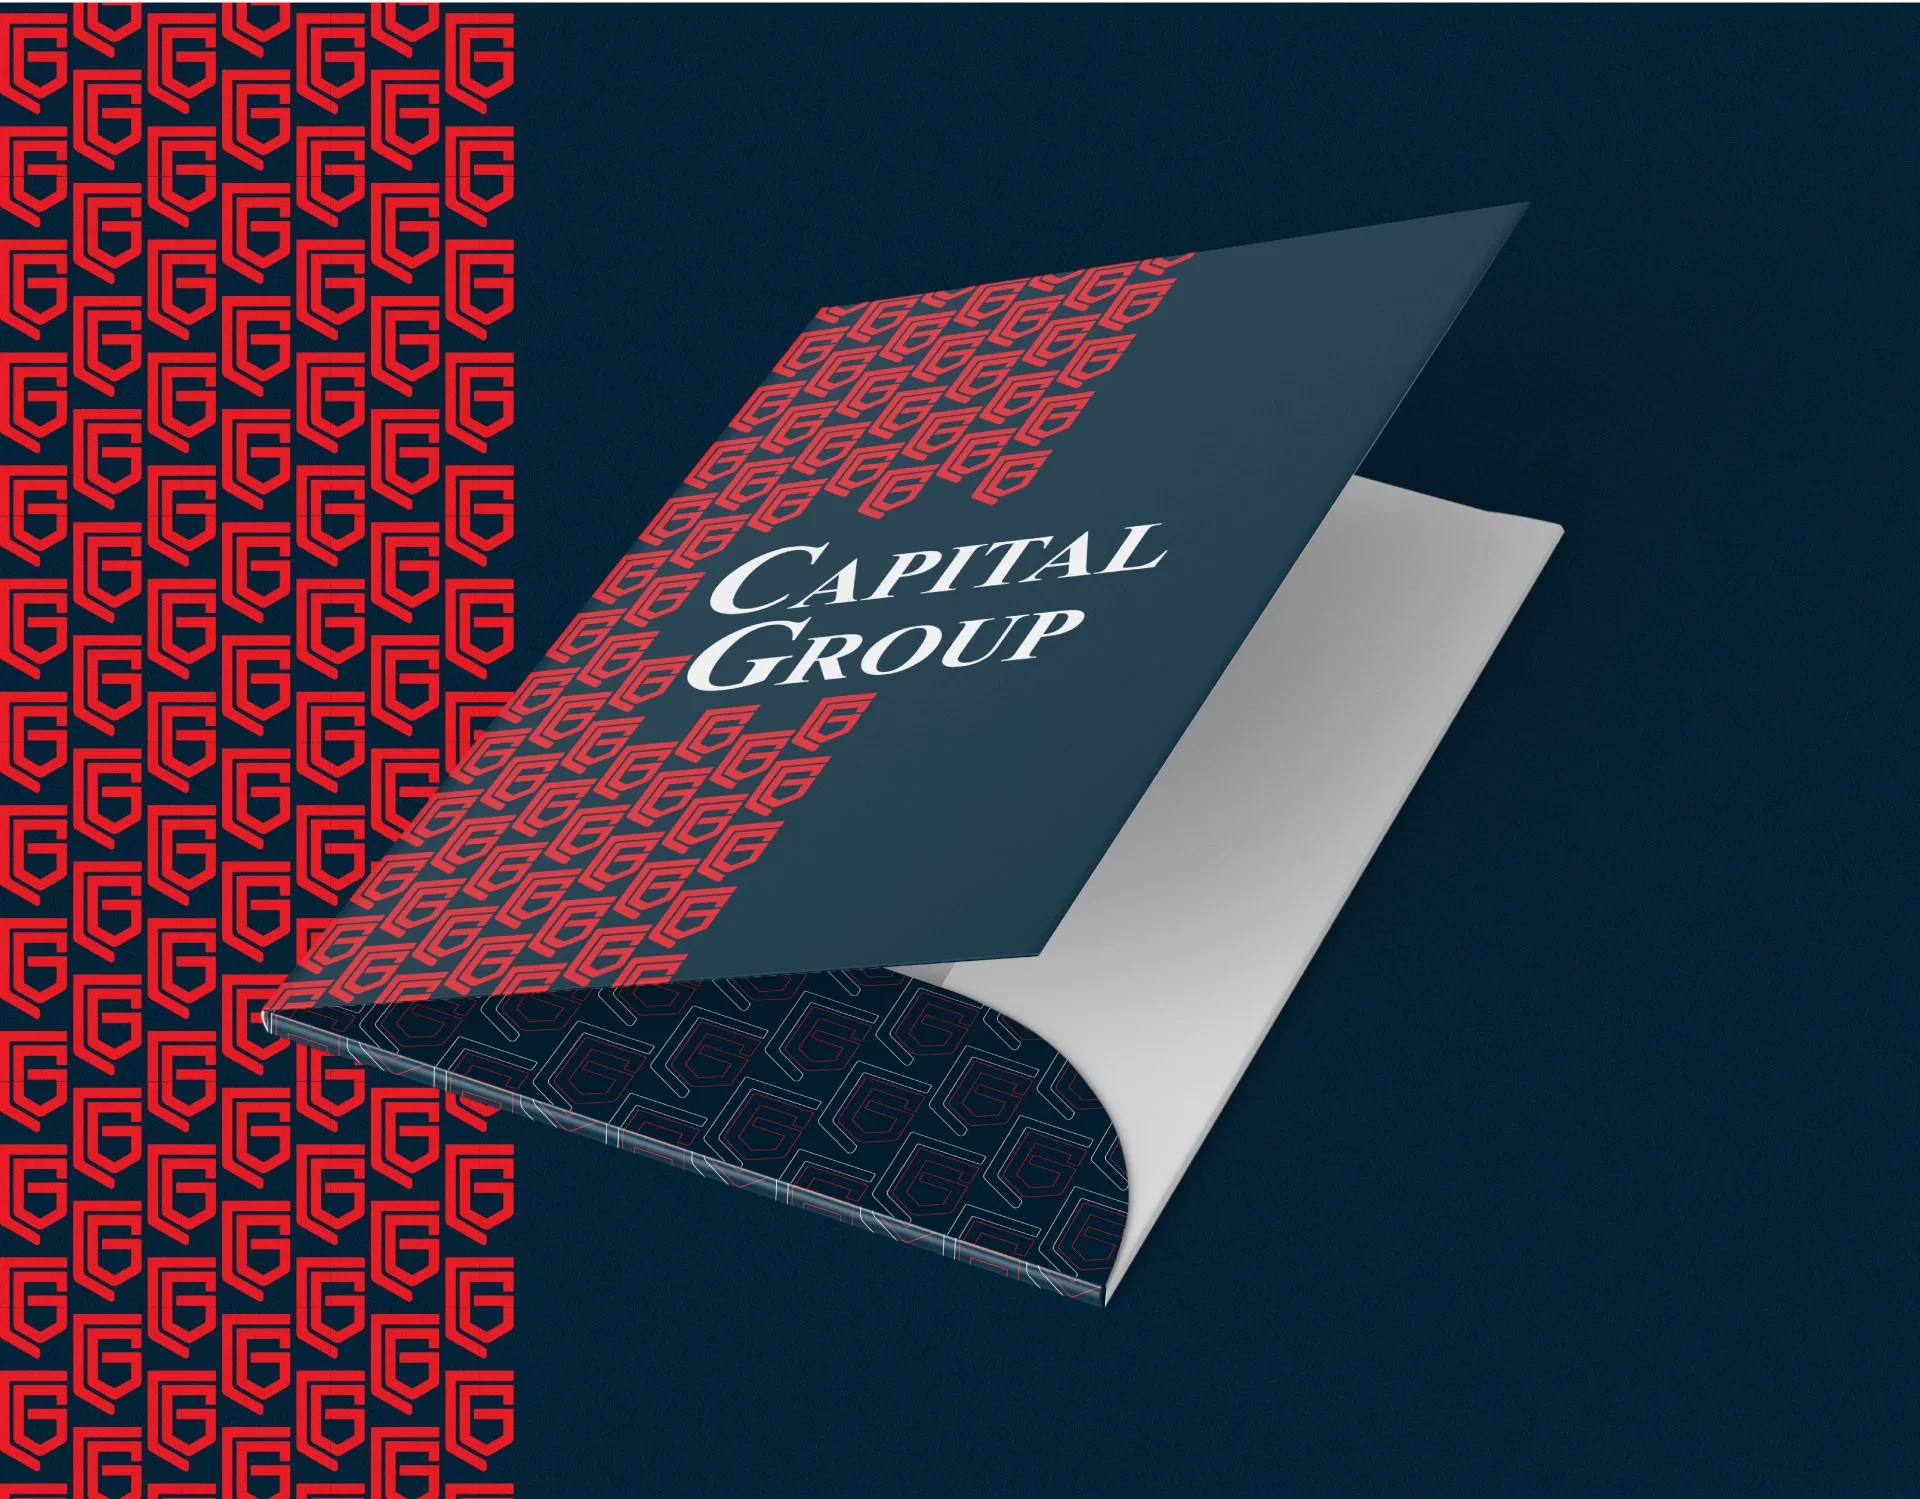 capital group branding13